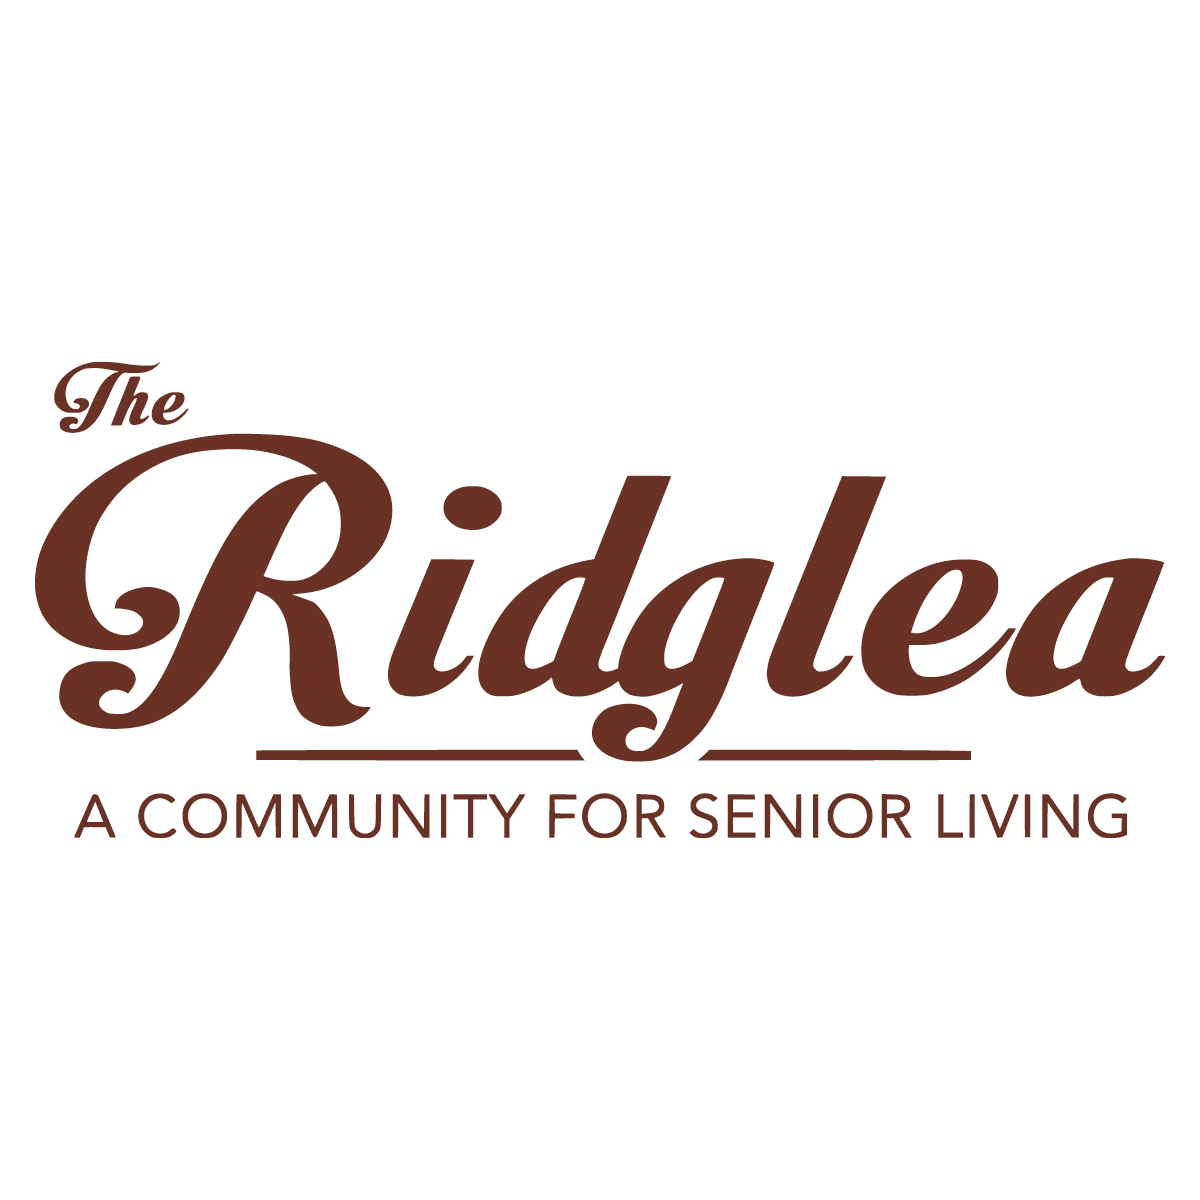 The Ridglea Logo